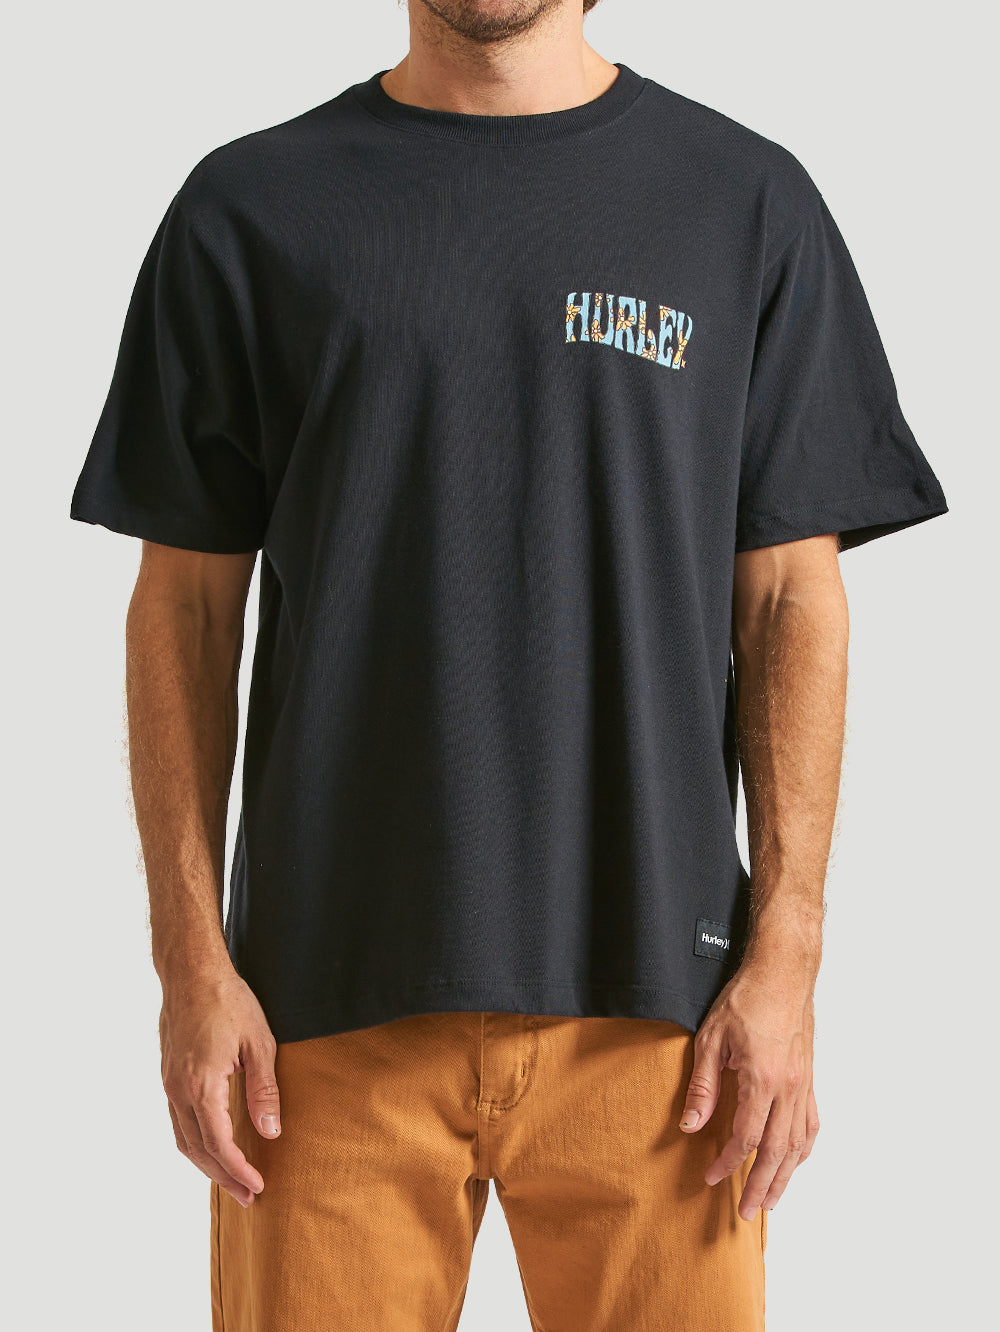 Camiseta Especial Hurley Woodstock Preto